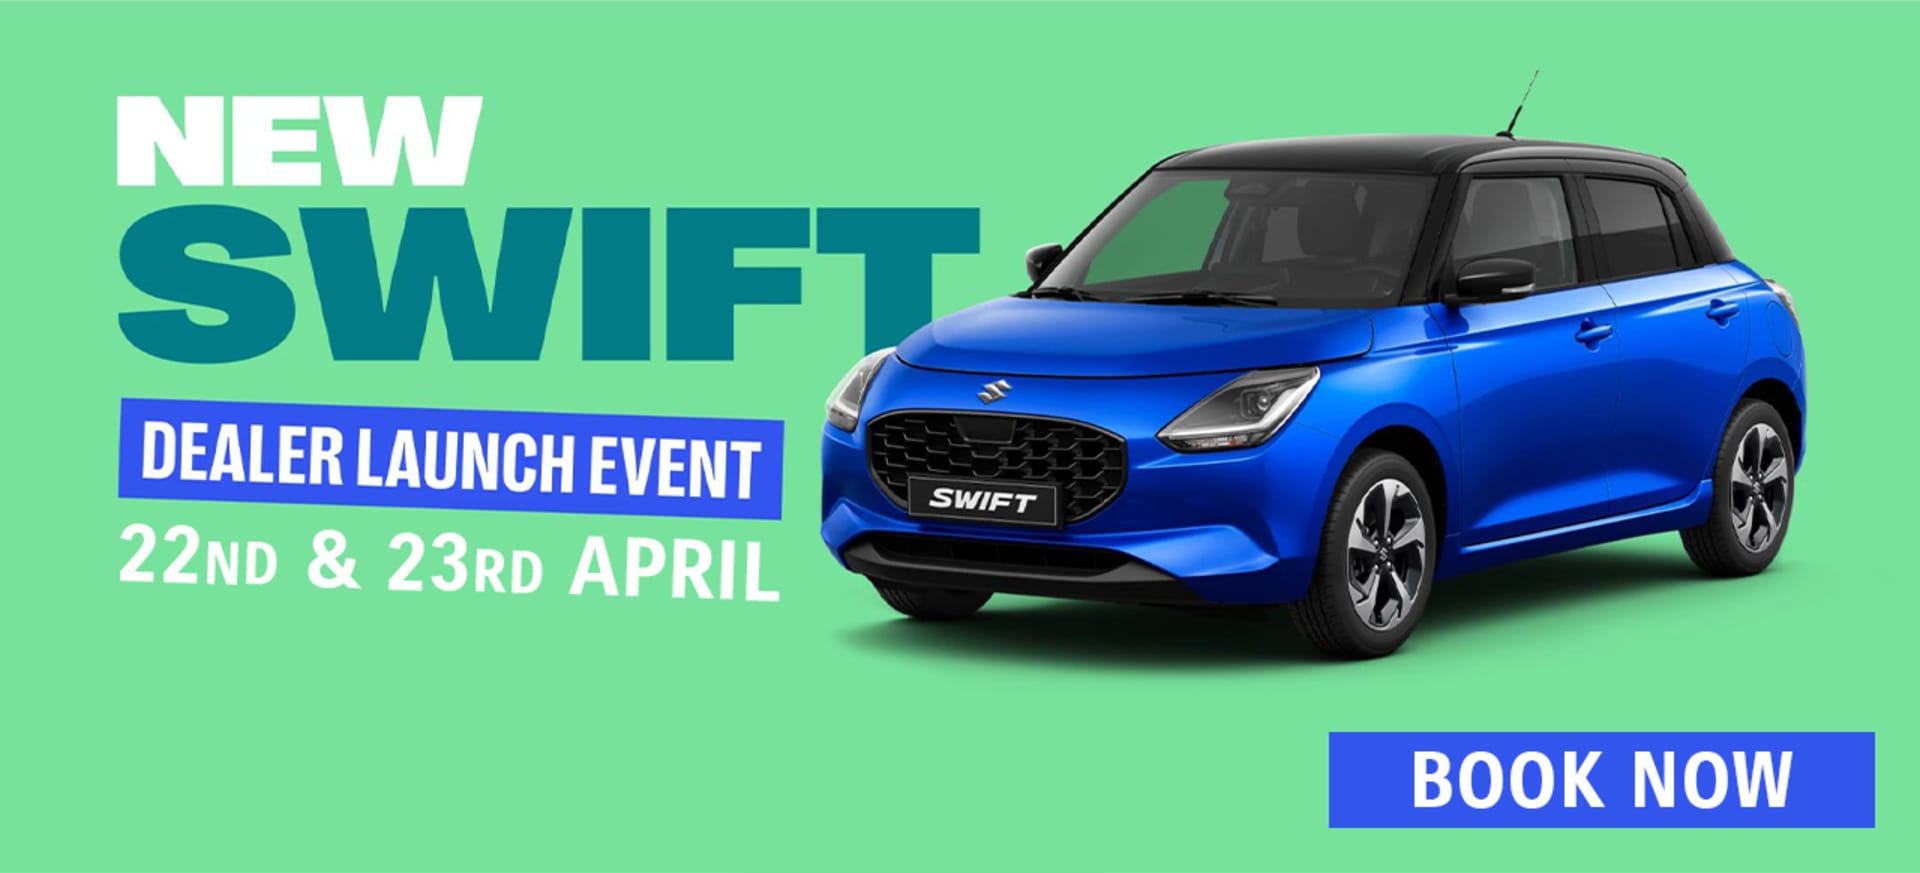 New Suzuki Swift Event